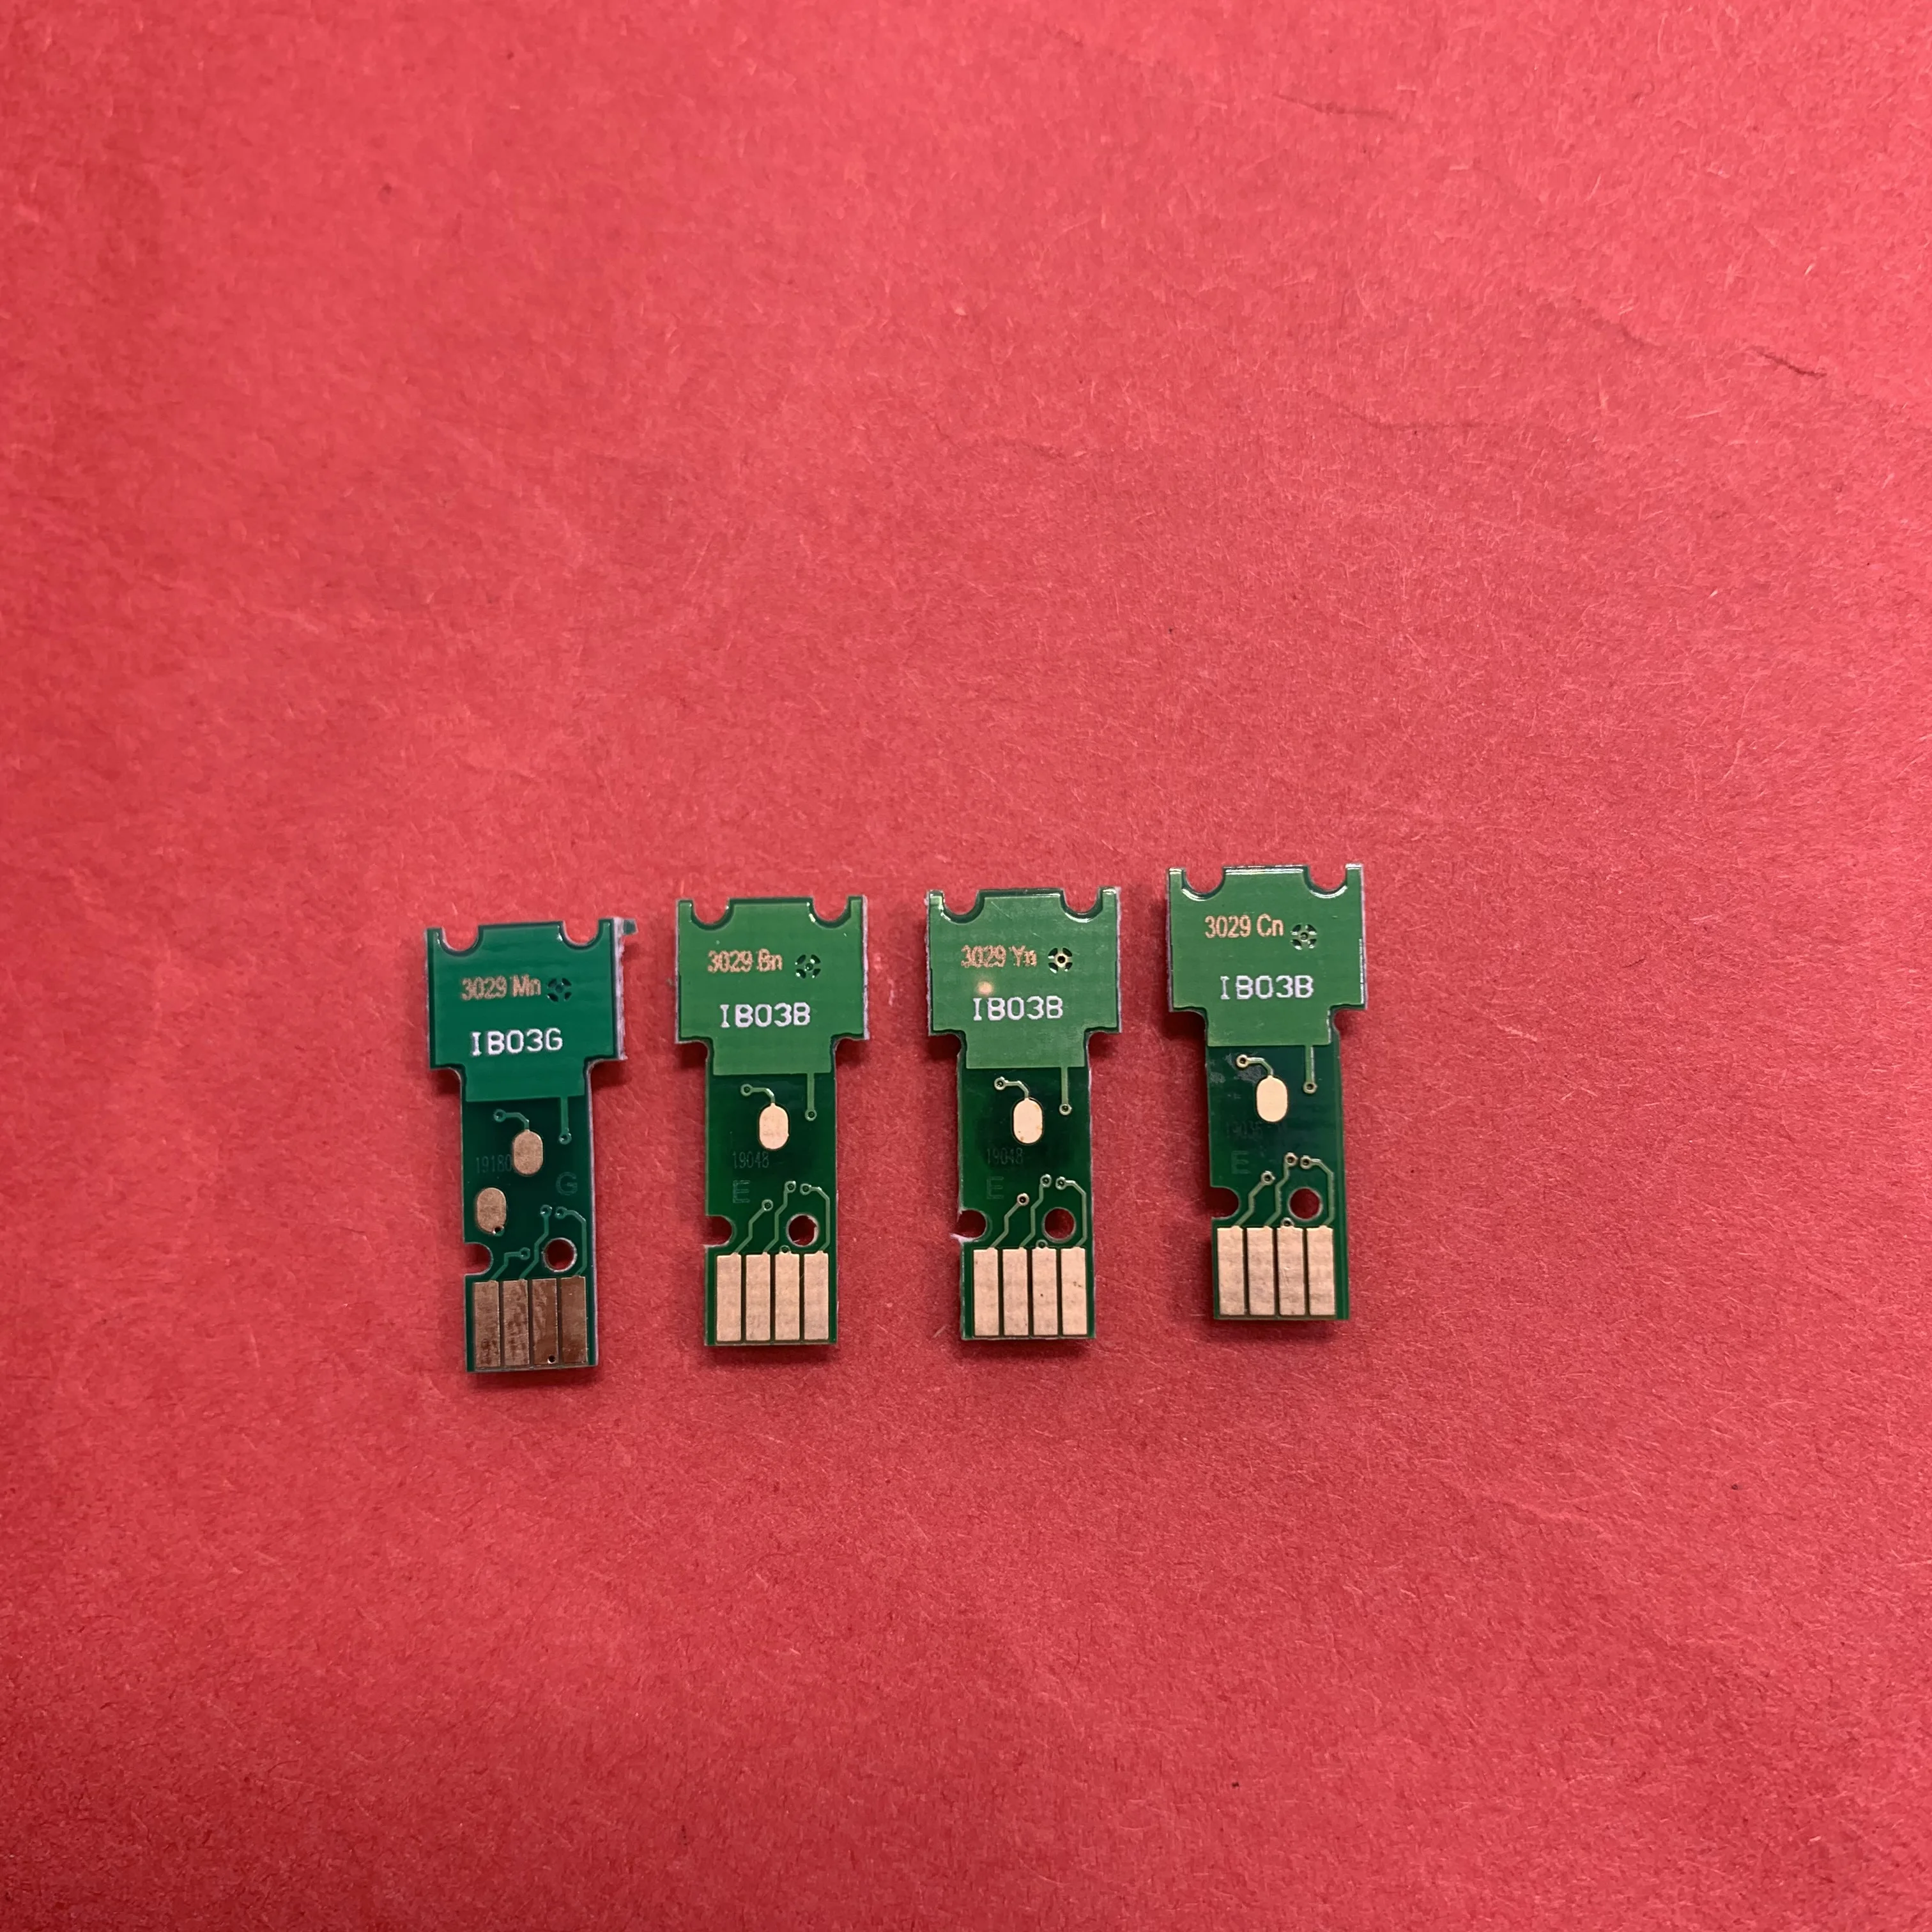 1 komplet LC3029XL Tinte patrone s čipom LC3029 Jednokratnu čip za Brother MFC-J5830DW MFC-J5830DW XL MFC-J5930DW MFC-J6535DW